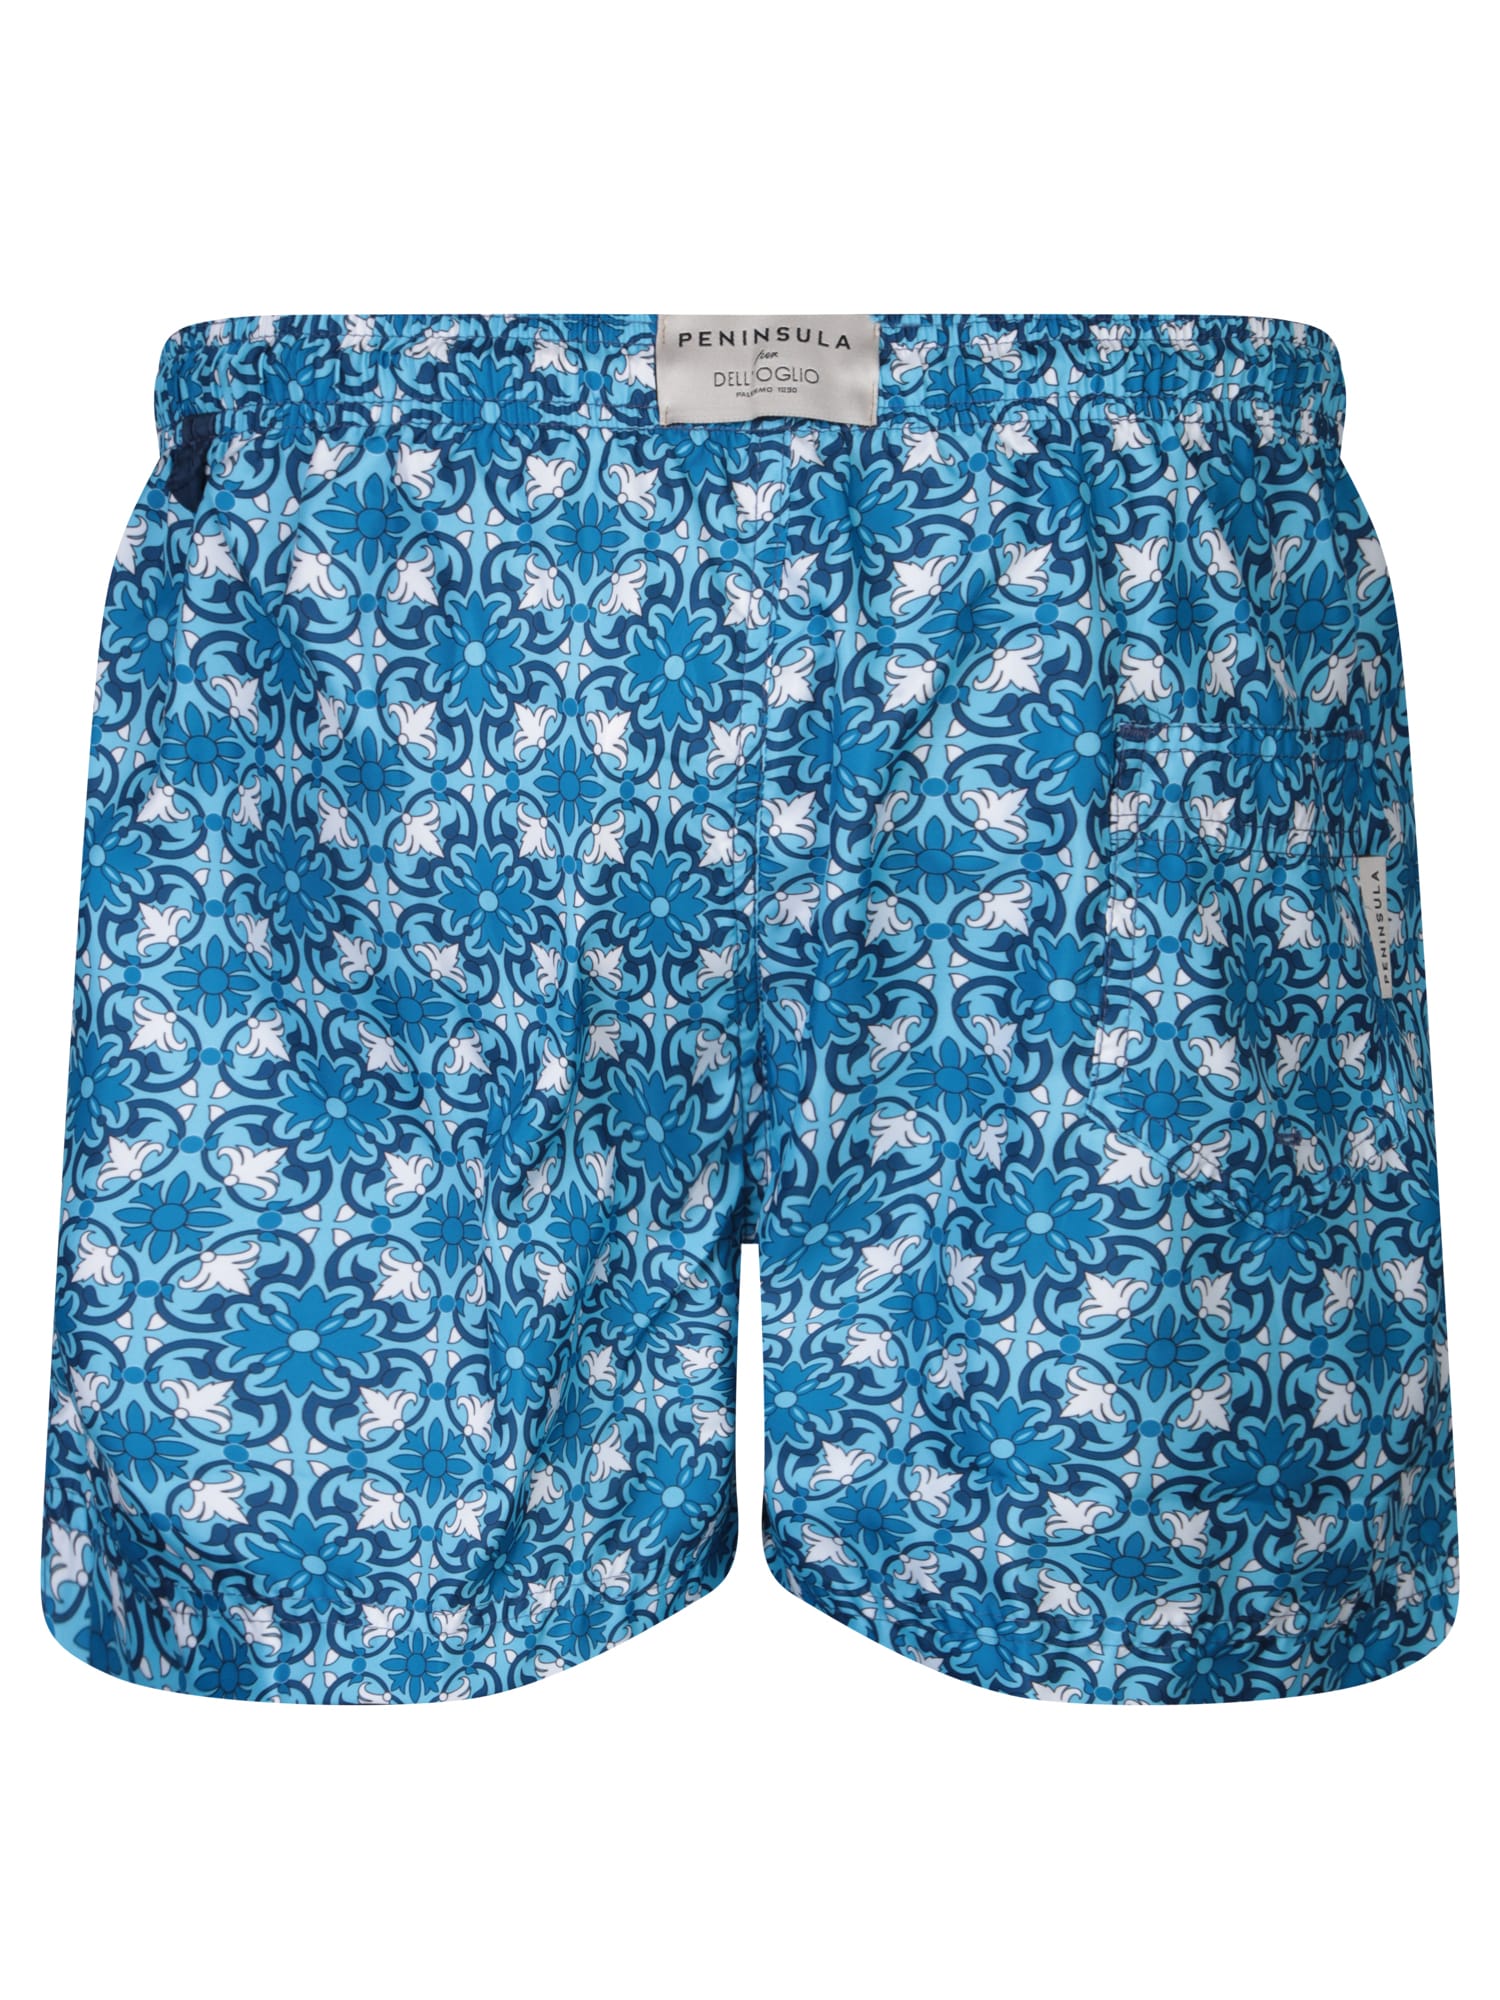 Shop Peninsula Swimwear Patterned Blue Boxer Swim Shorts